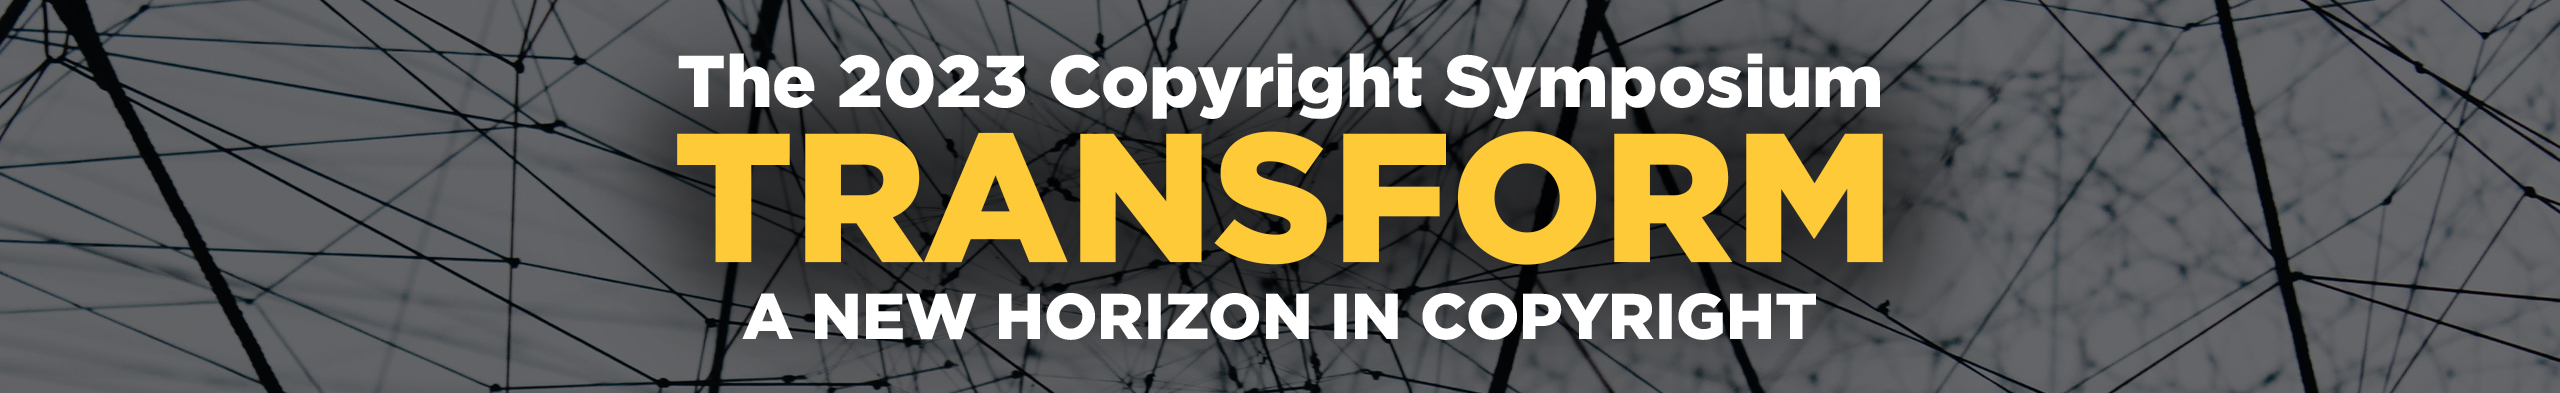 The 2023 Copyright Symposim. Transform a new horizon in copyright.